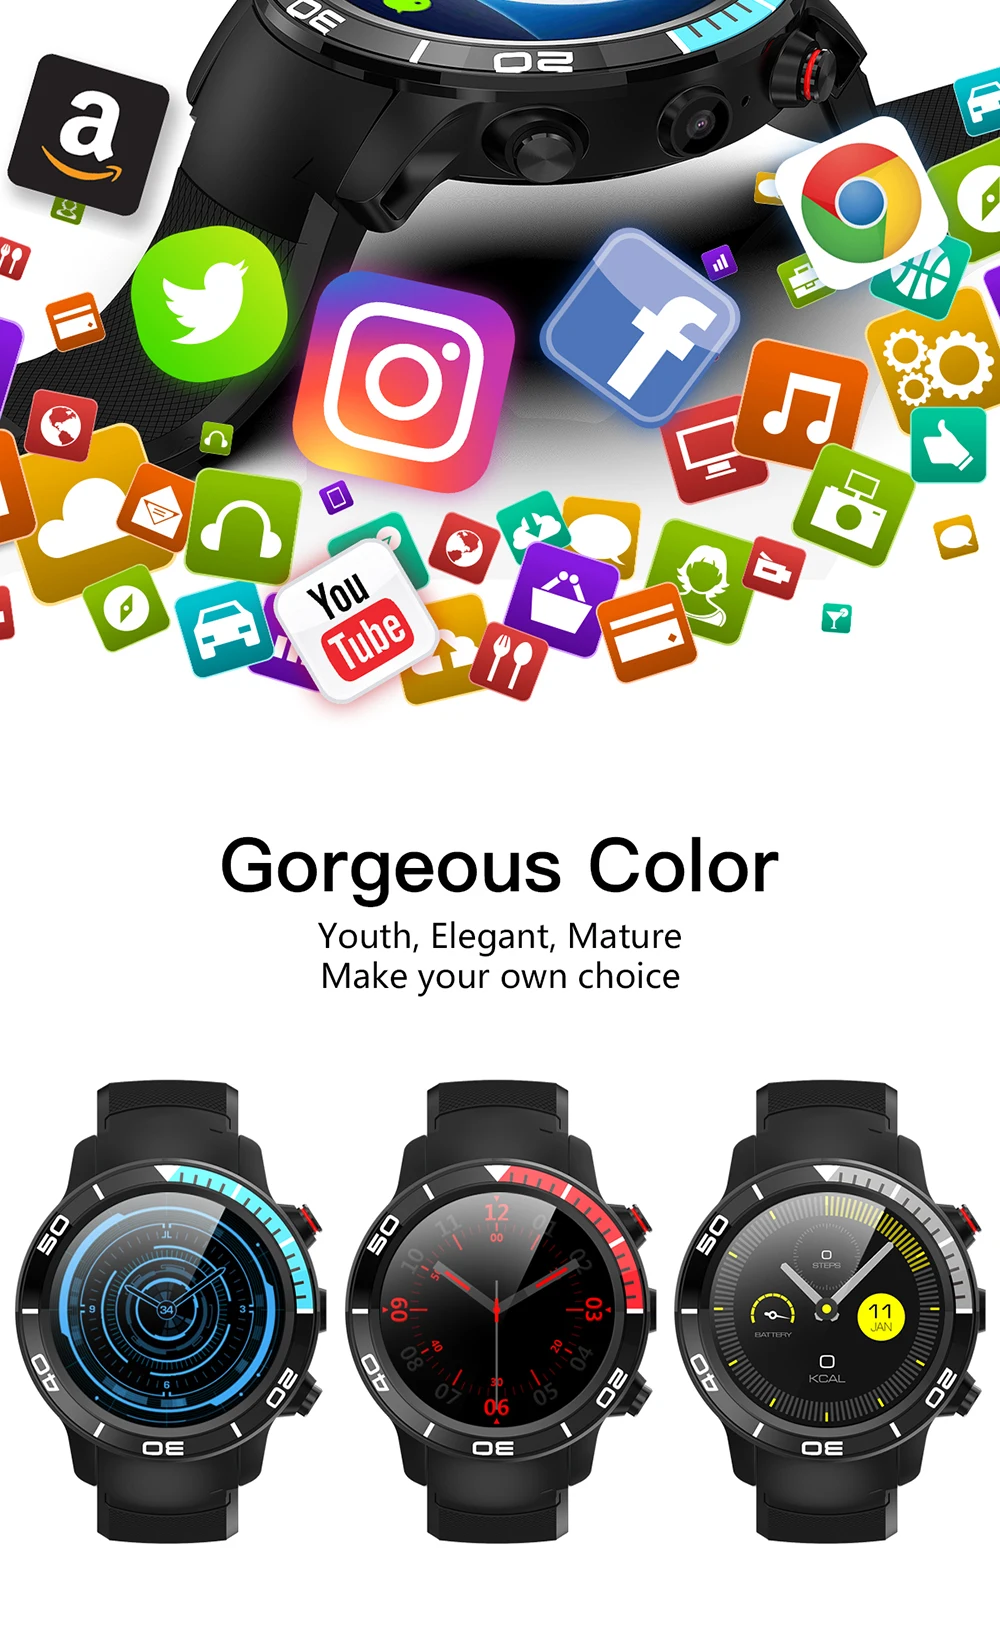 Новые 4G Смарт часы Телефон IP68 Водонепроницаемый 5.0MP камера 1,3" Cheep Bluetooth Android/ios телефоны PK 4 PRO X361 H8 умные часы для мужчин